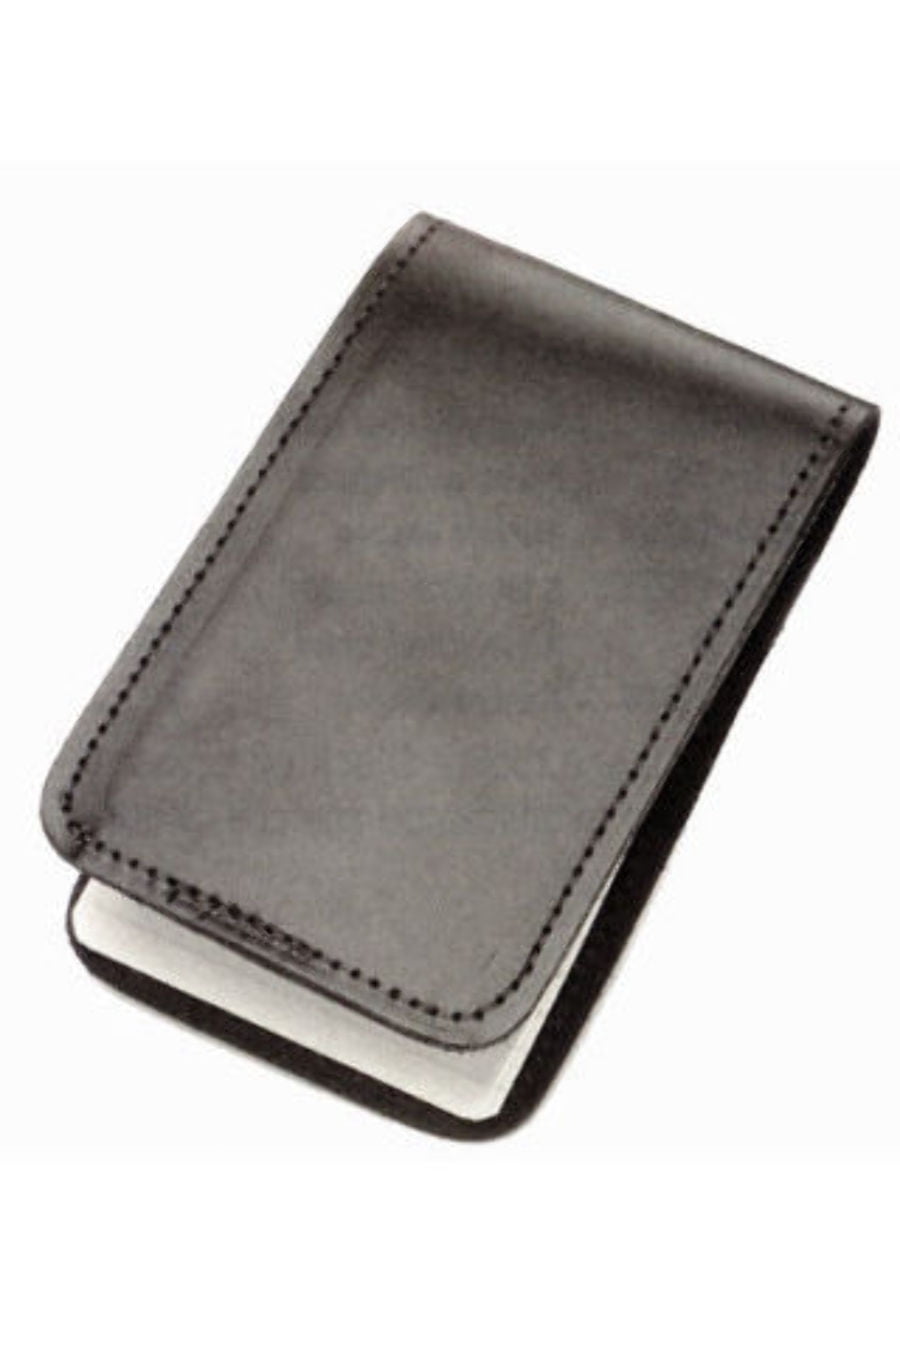 ASR Federal Leather 3x5 Standard Memo Book Cover Plain Black 